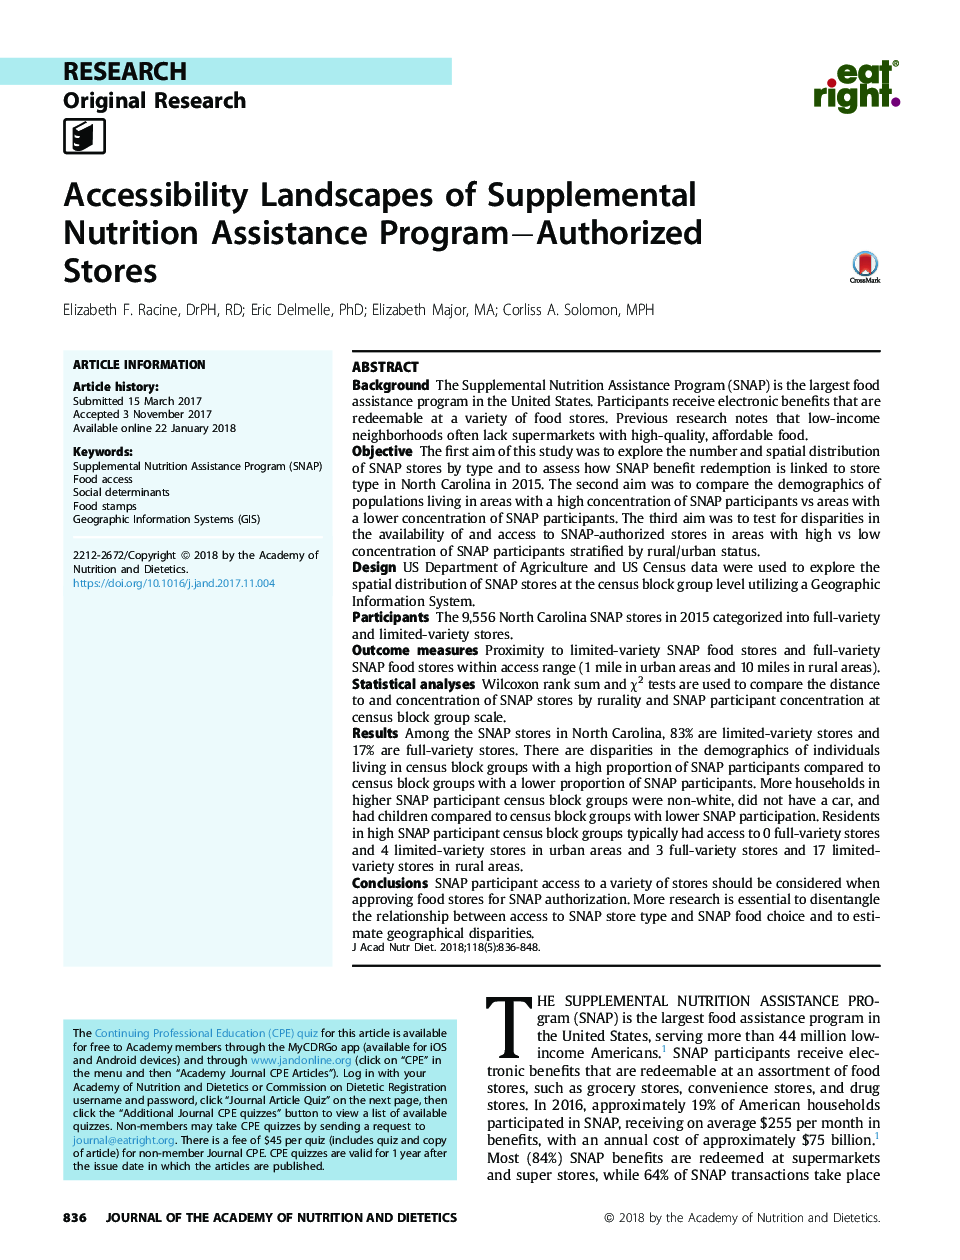 Accessibility Landscapes of Supplemental Nutrition Assistance ProgramâAuthorized Stores